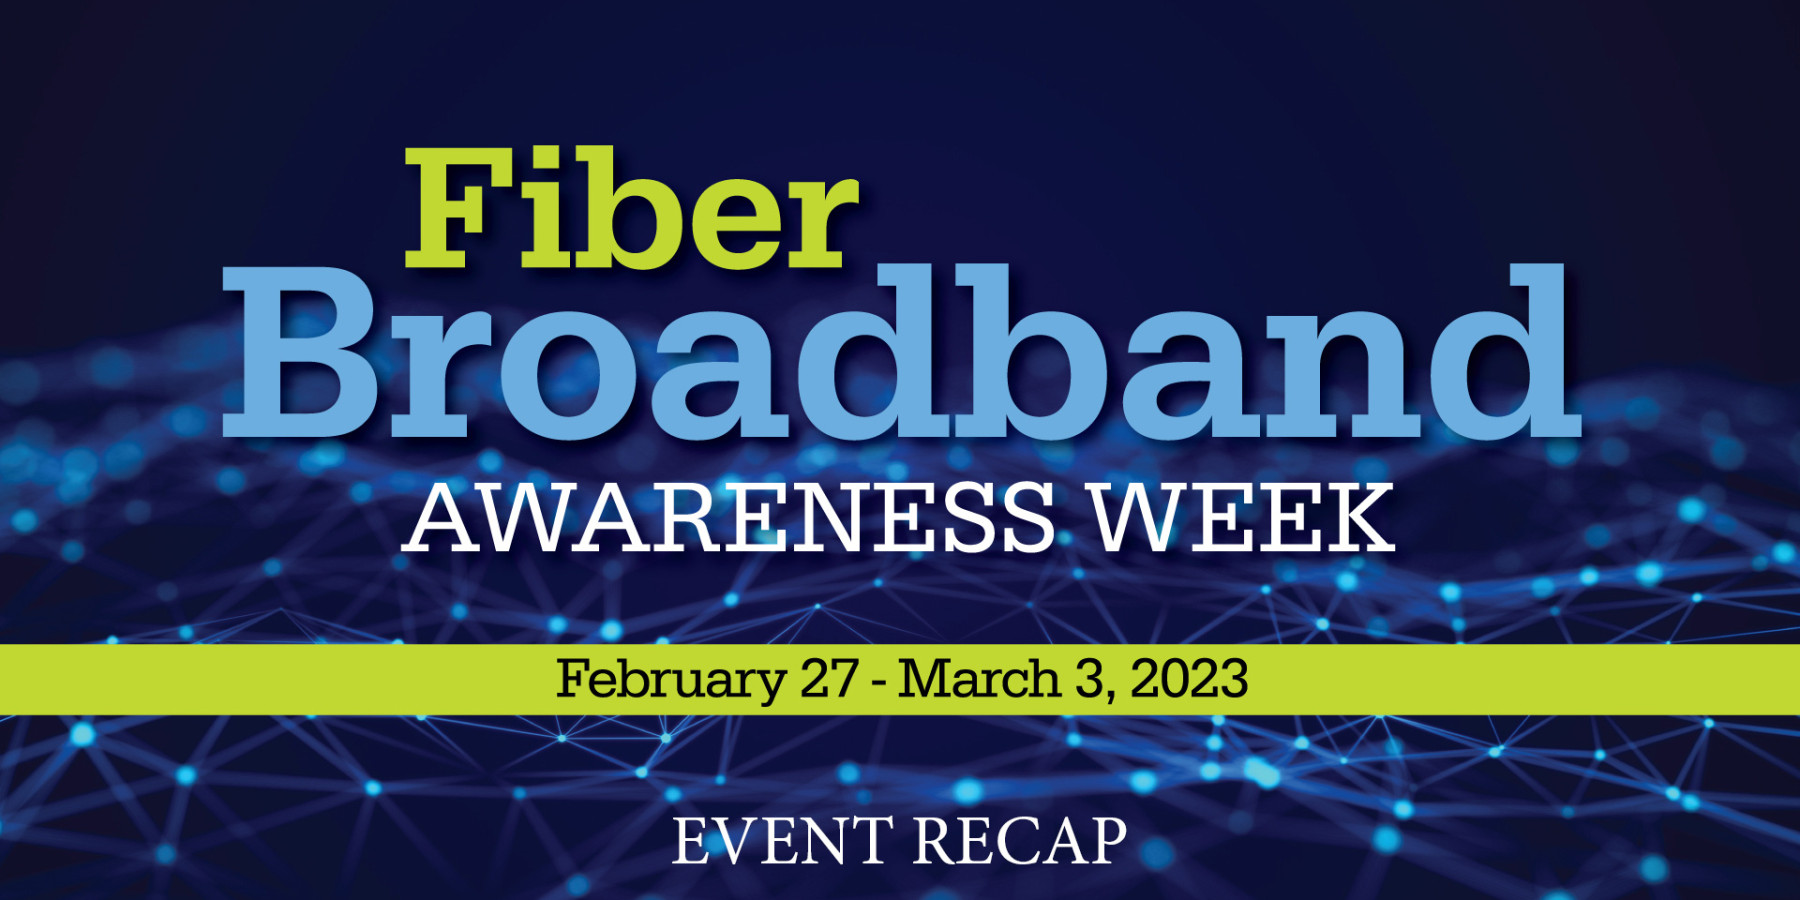 Fiber Broadband Awareness Week | February 27 - March 3, 2023